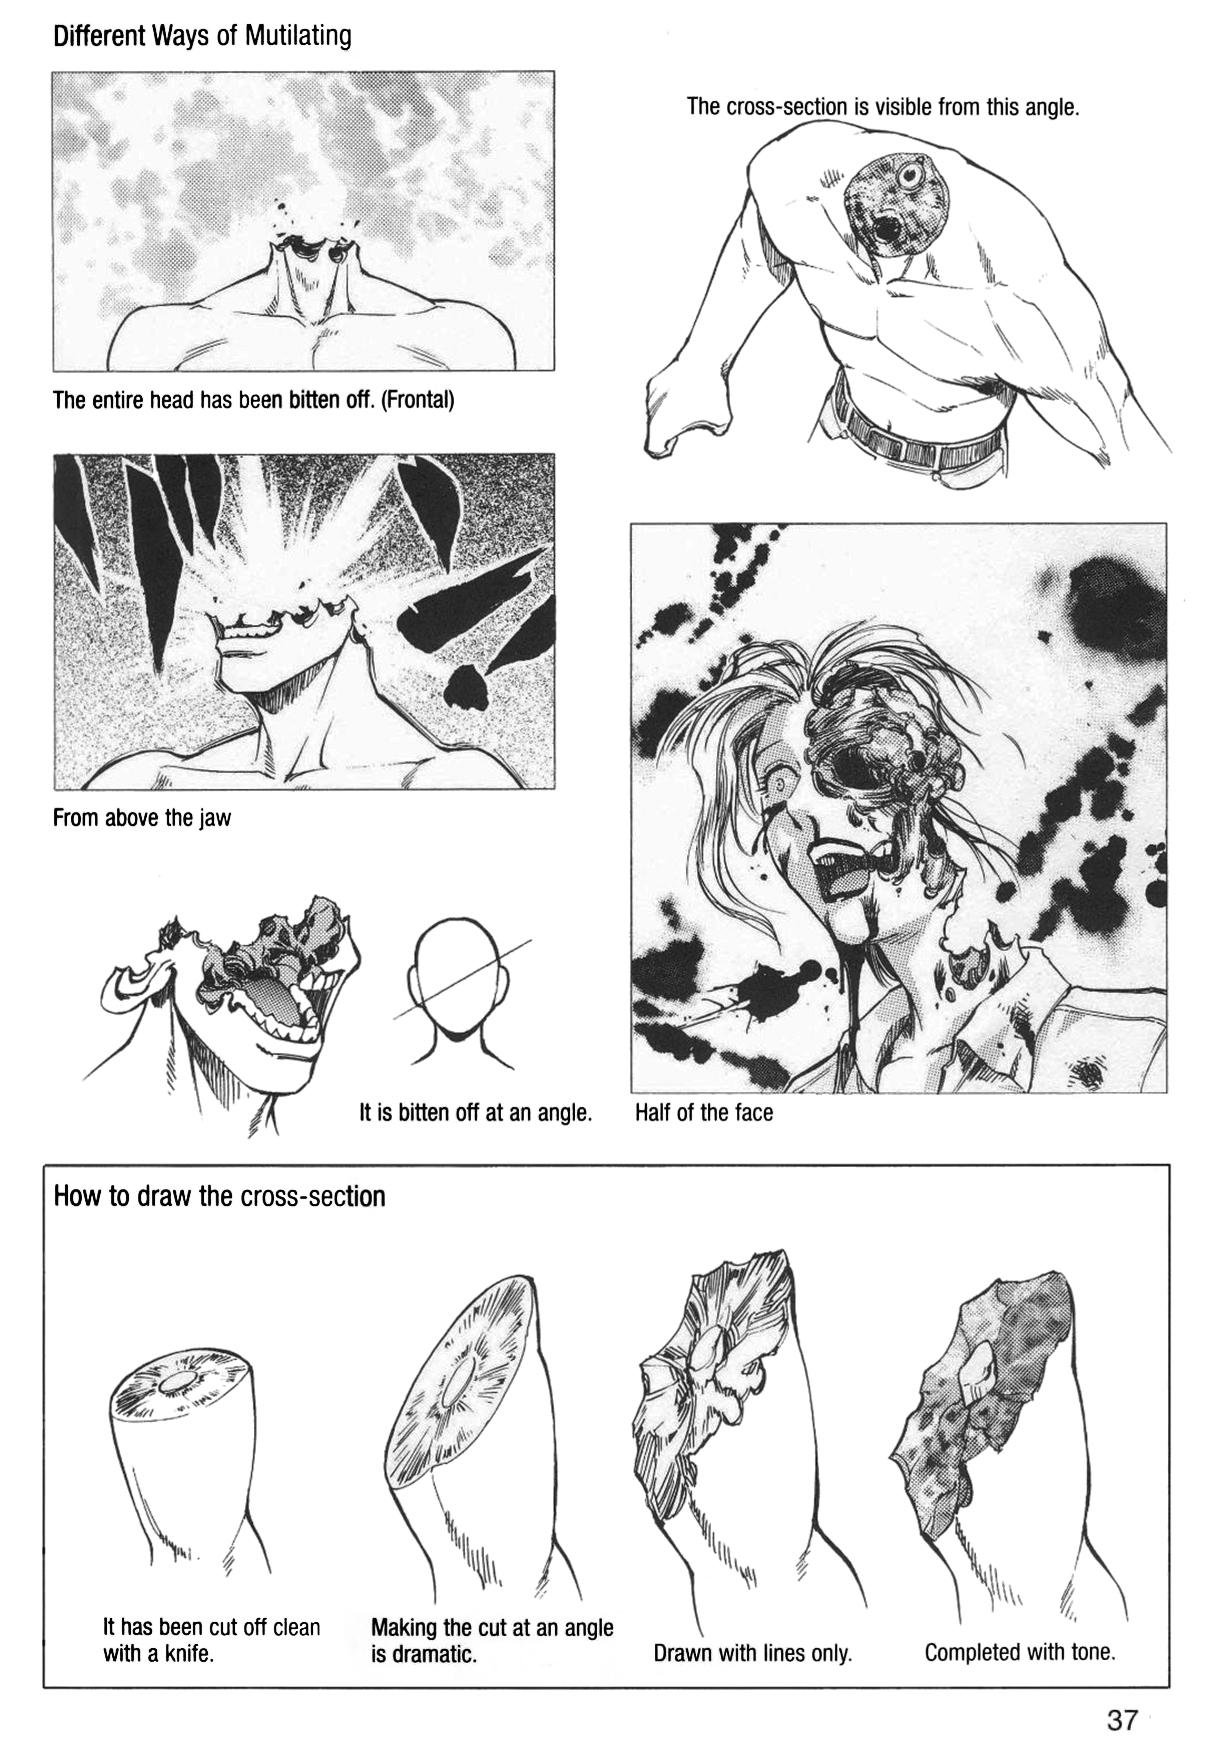 How to Draw Manga Vol. 24, Occult & Horror by Hikaru Hayashi 40